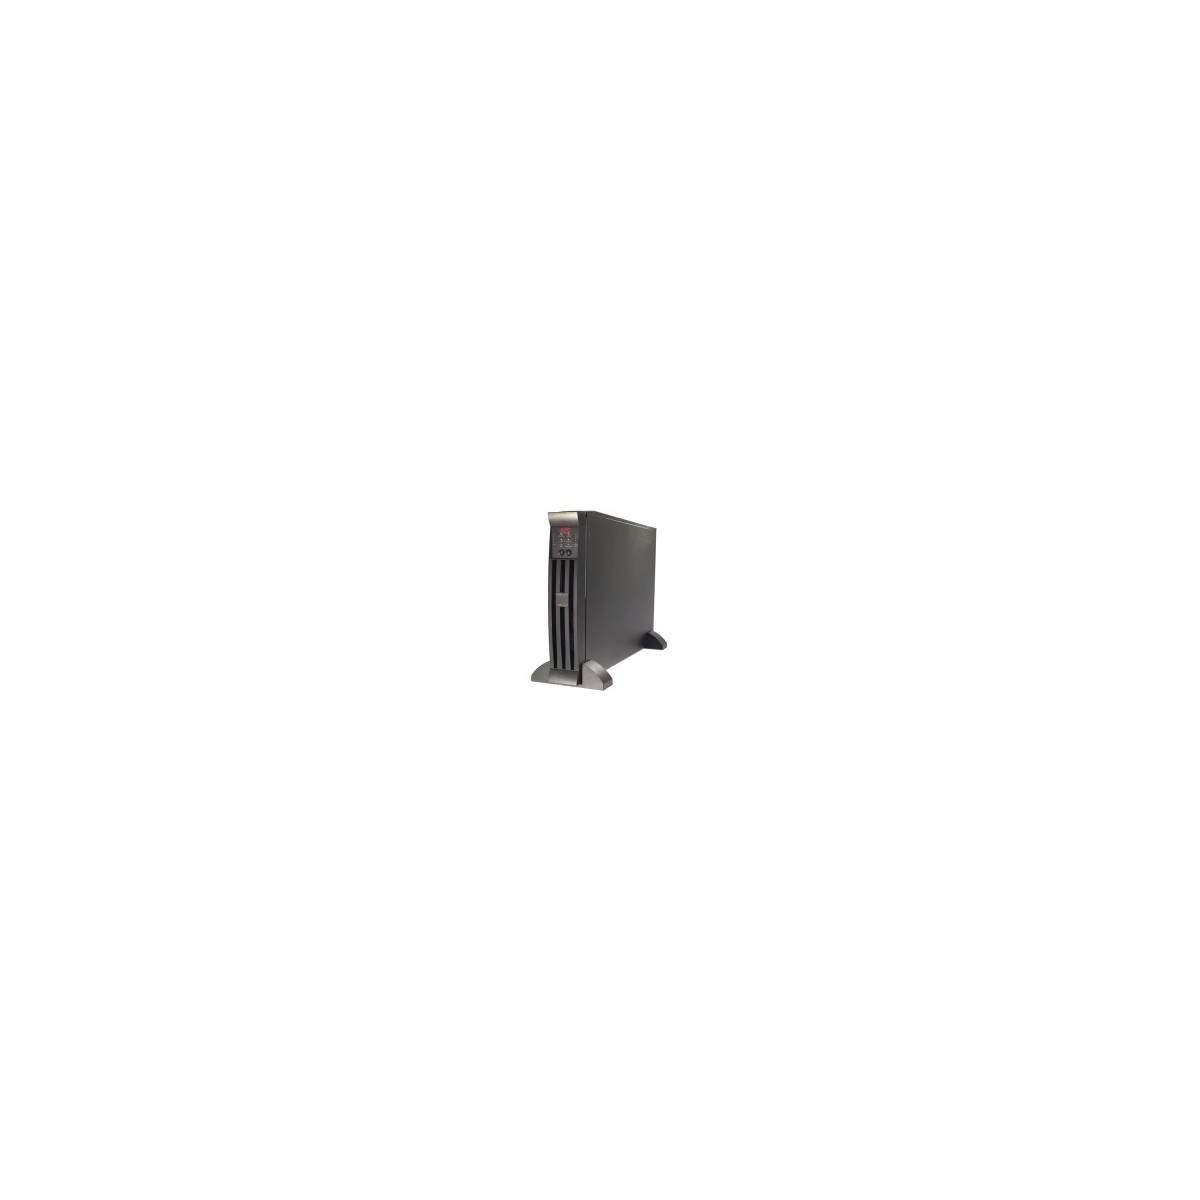 APC Smart-UPS XL Modular 1500VA - (Offline) UPS 1,500 W Rack module - 19 